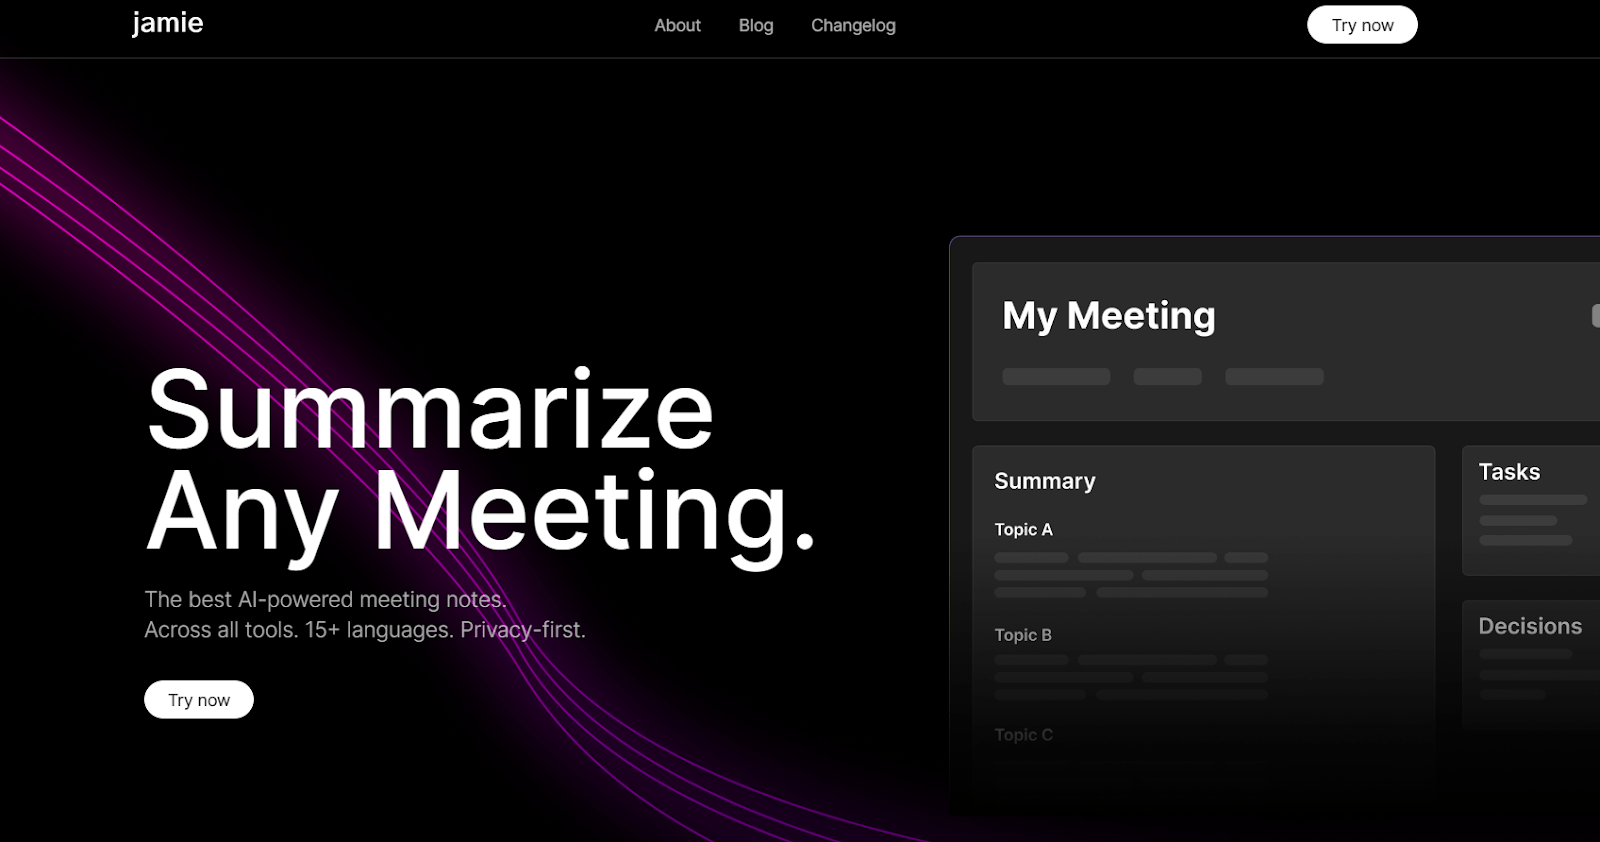 jamie website - summarize any meeting